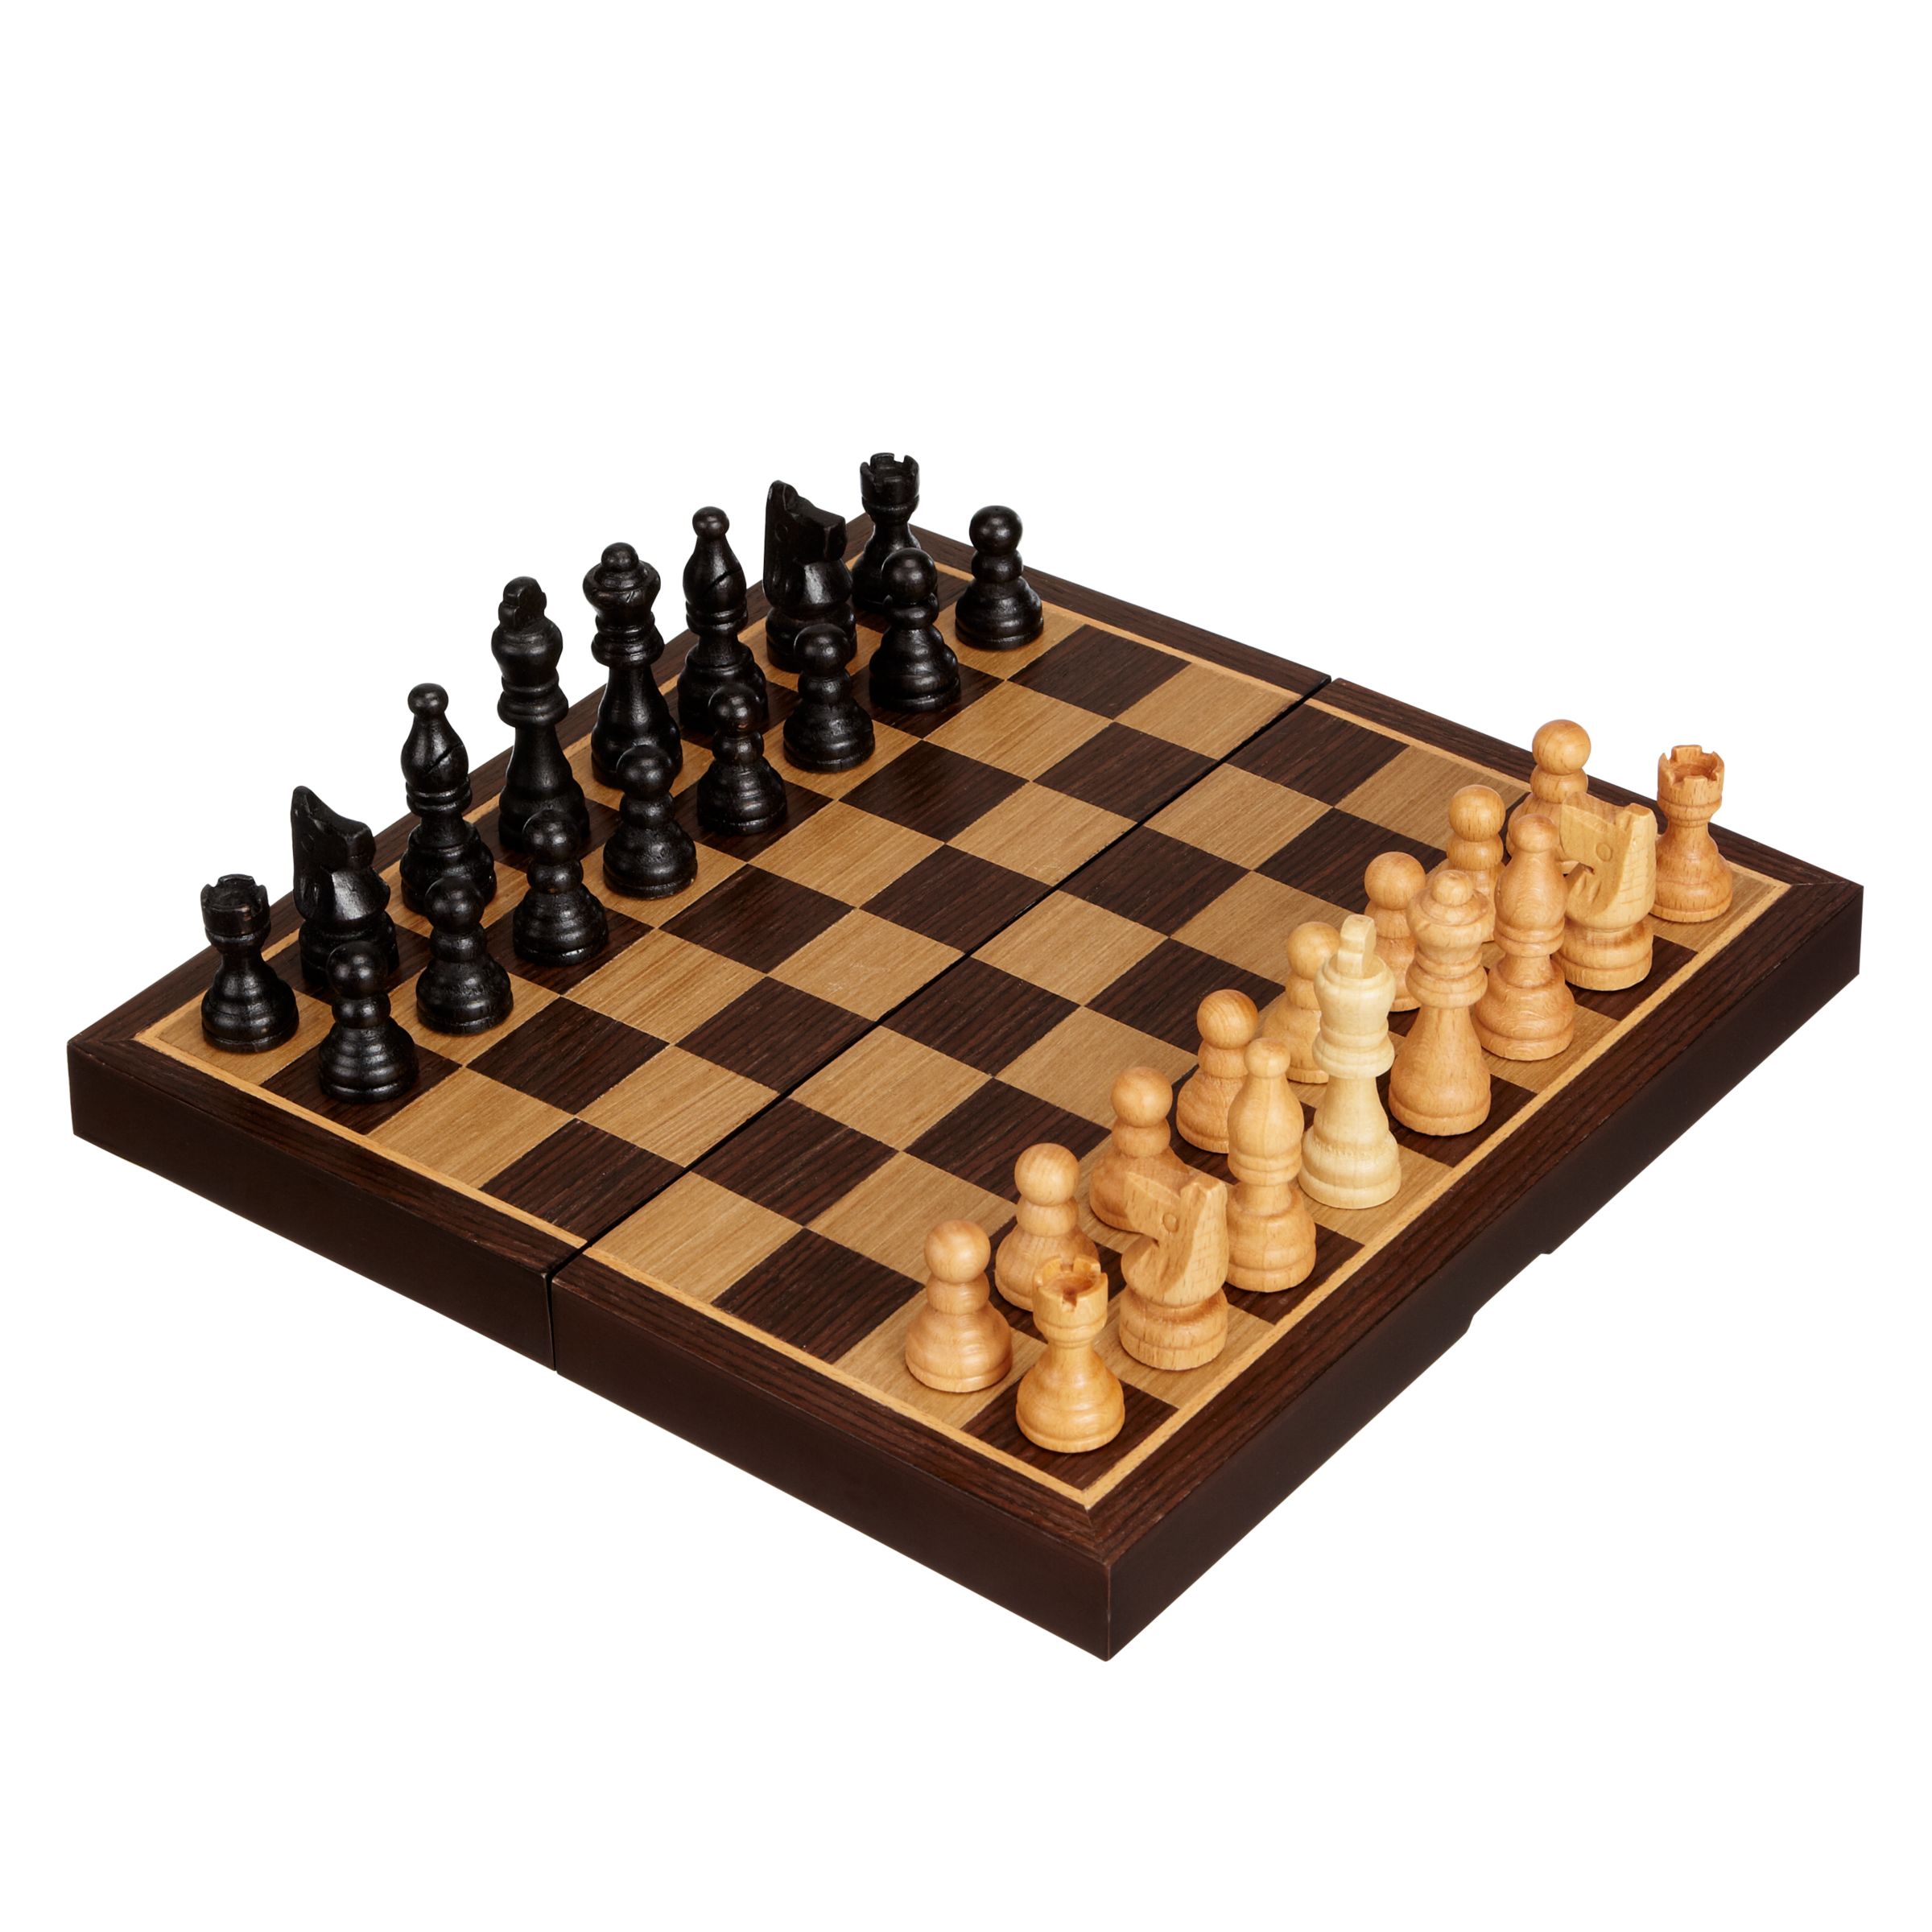 John Lewis & Partners Classic Chess Set, Small